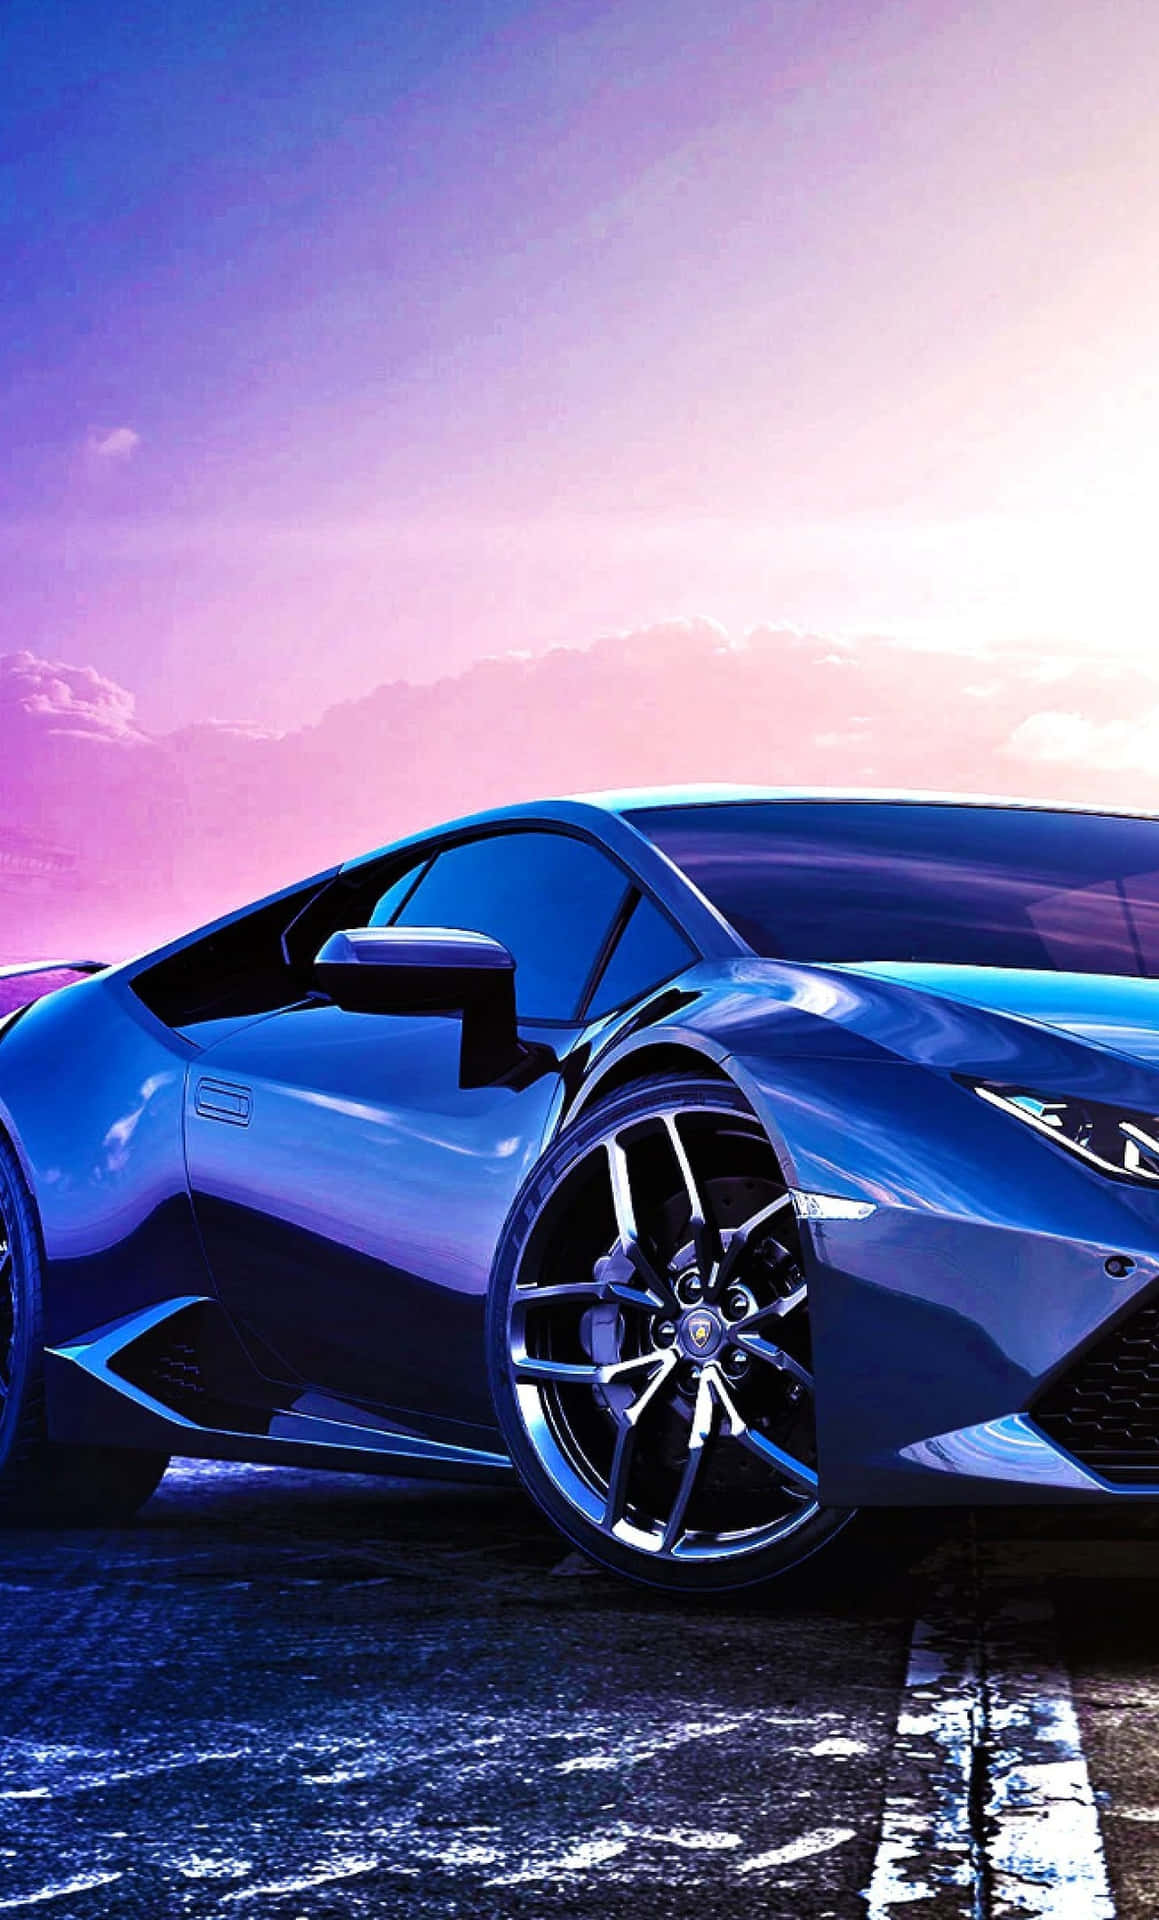 Zoom in on the beautiful blue Lamborghini Wallpaper